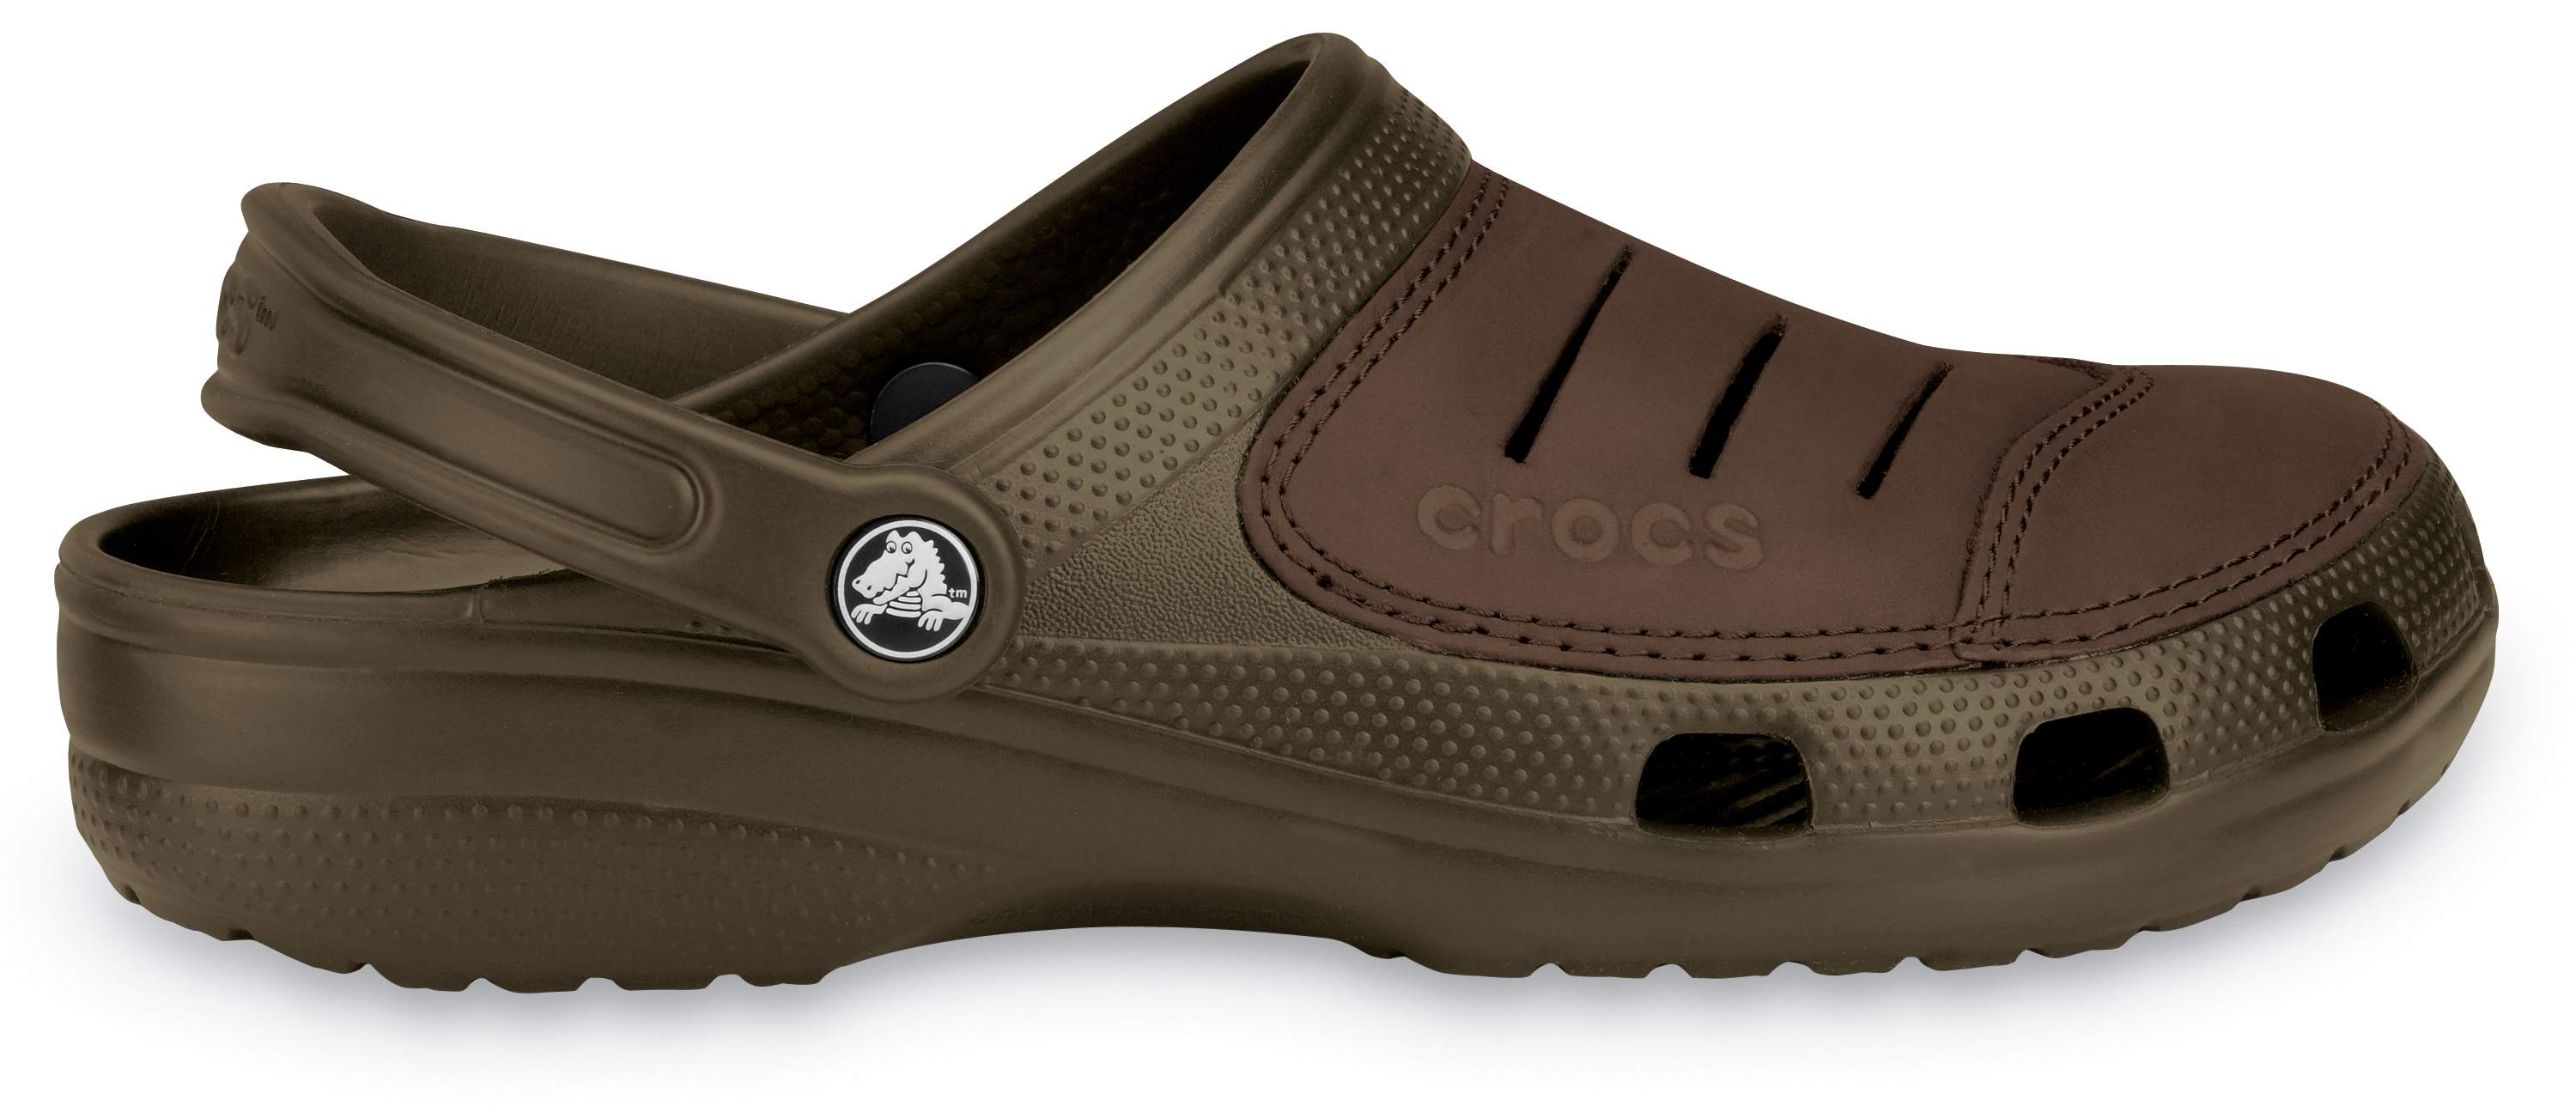 crocs 2x1